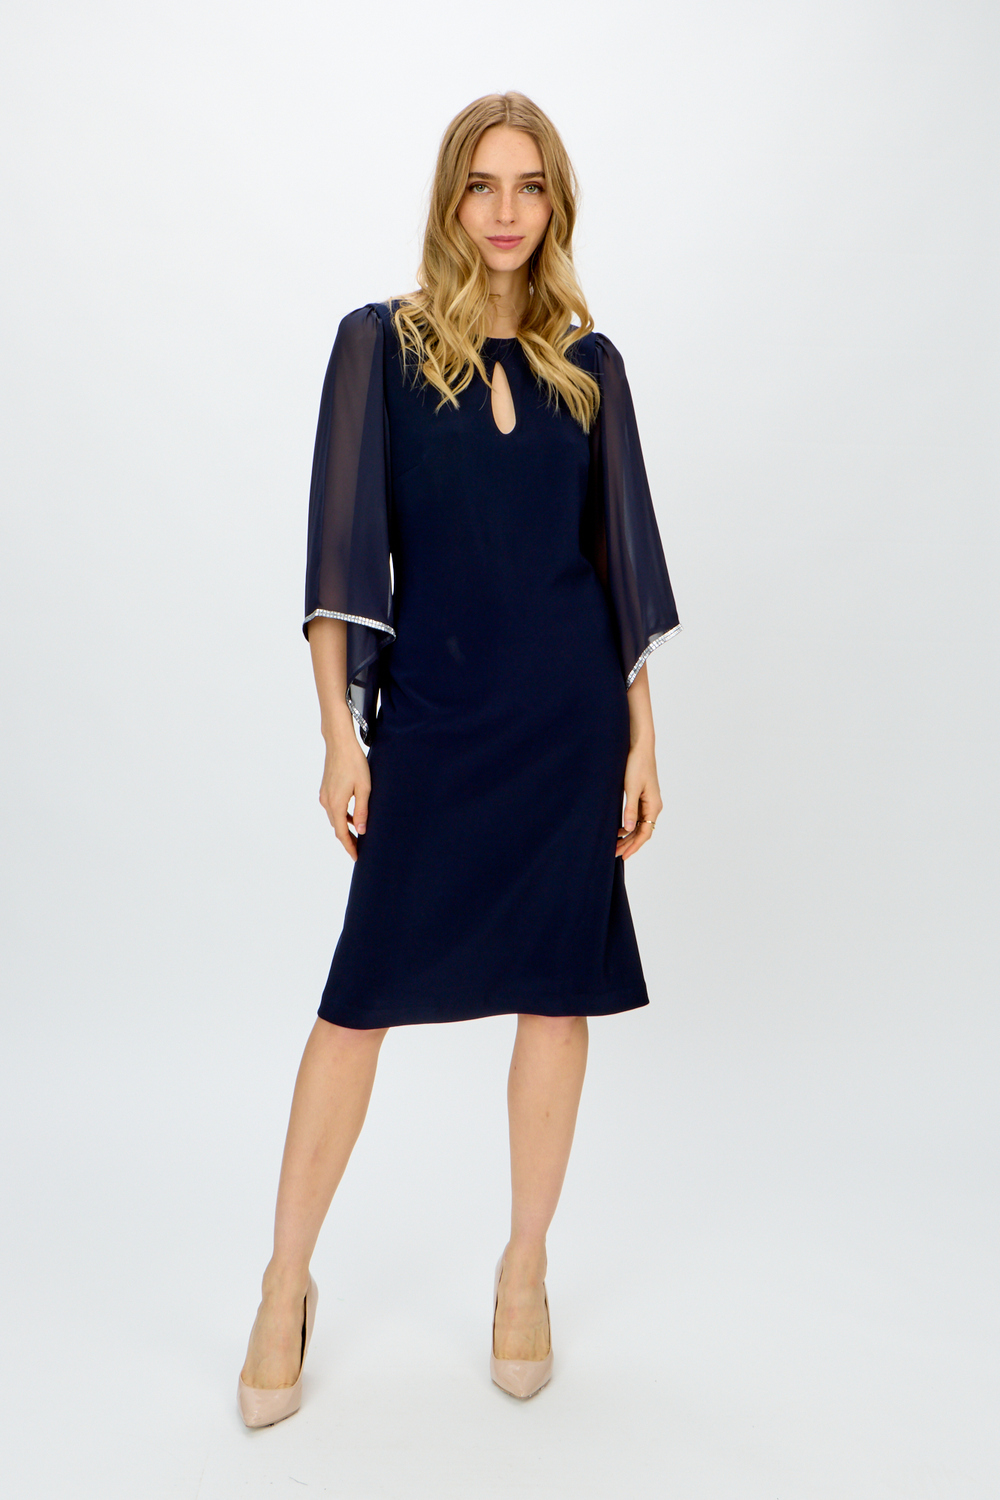 Dress, shiny 3/4 sleeves Model 241709. Midnight Blue